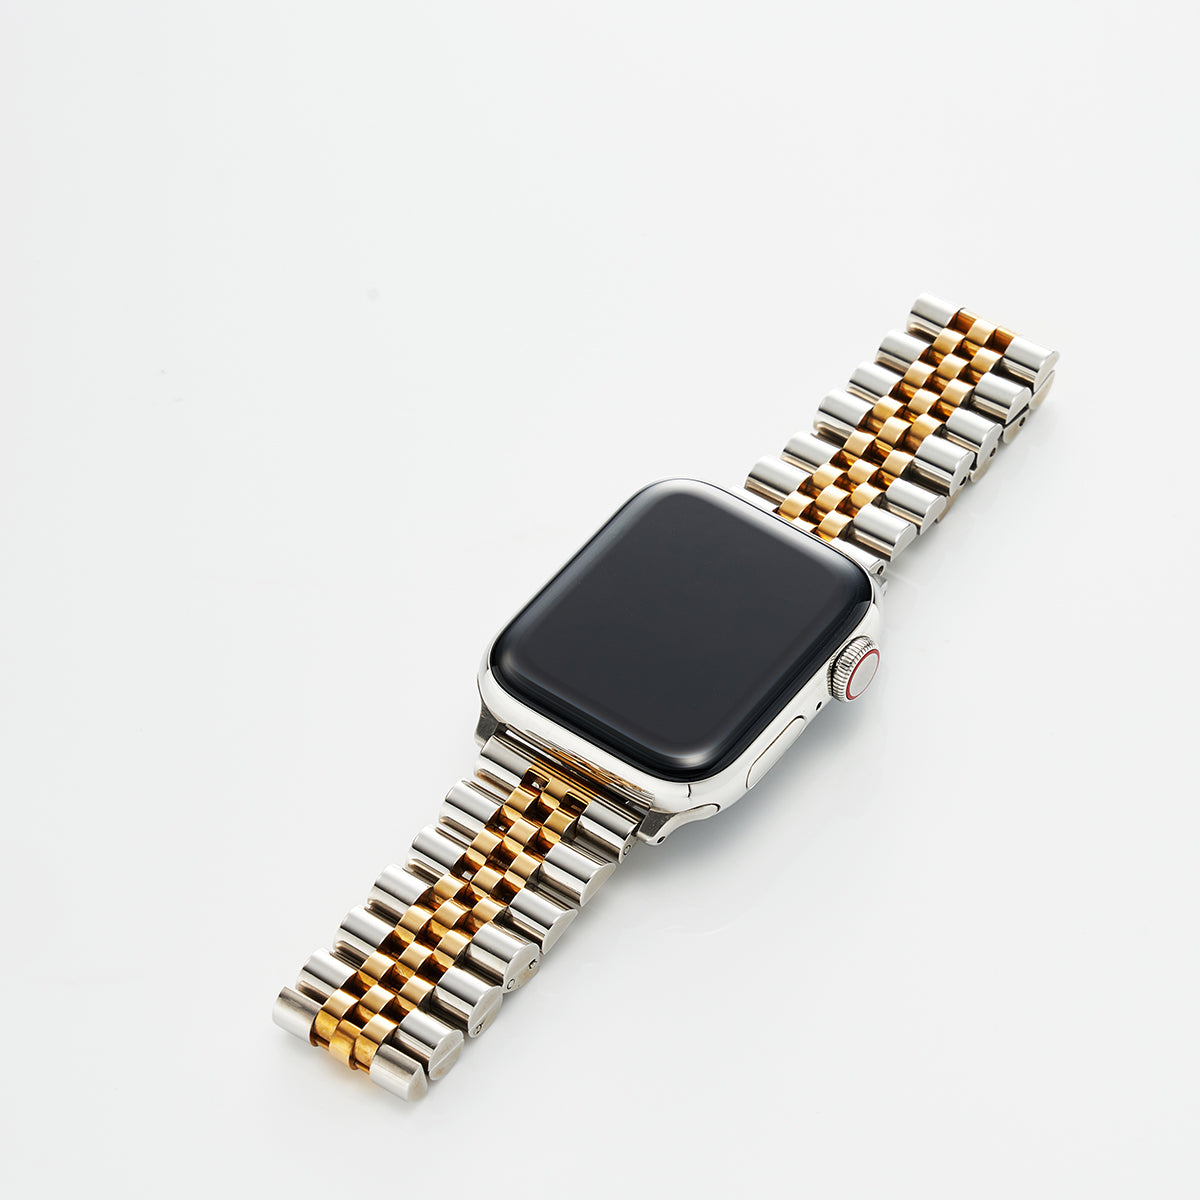 Juuk Locarno Apple Watch Bracelet Review  aBlogtoWatch